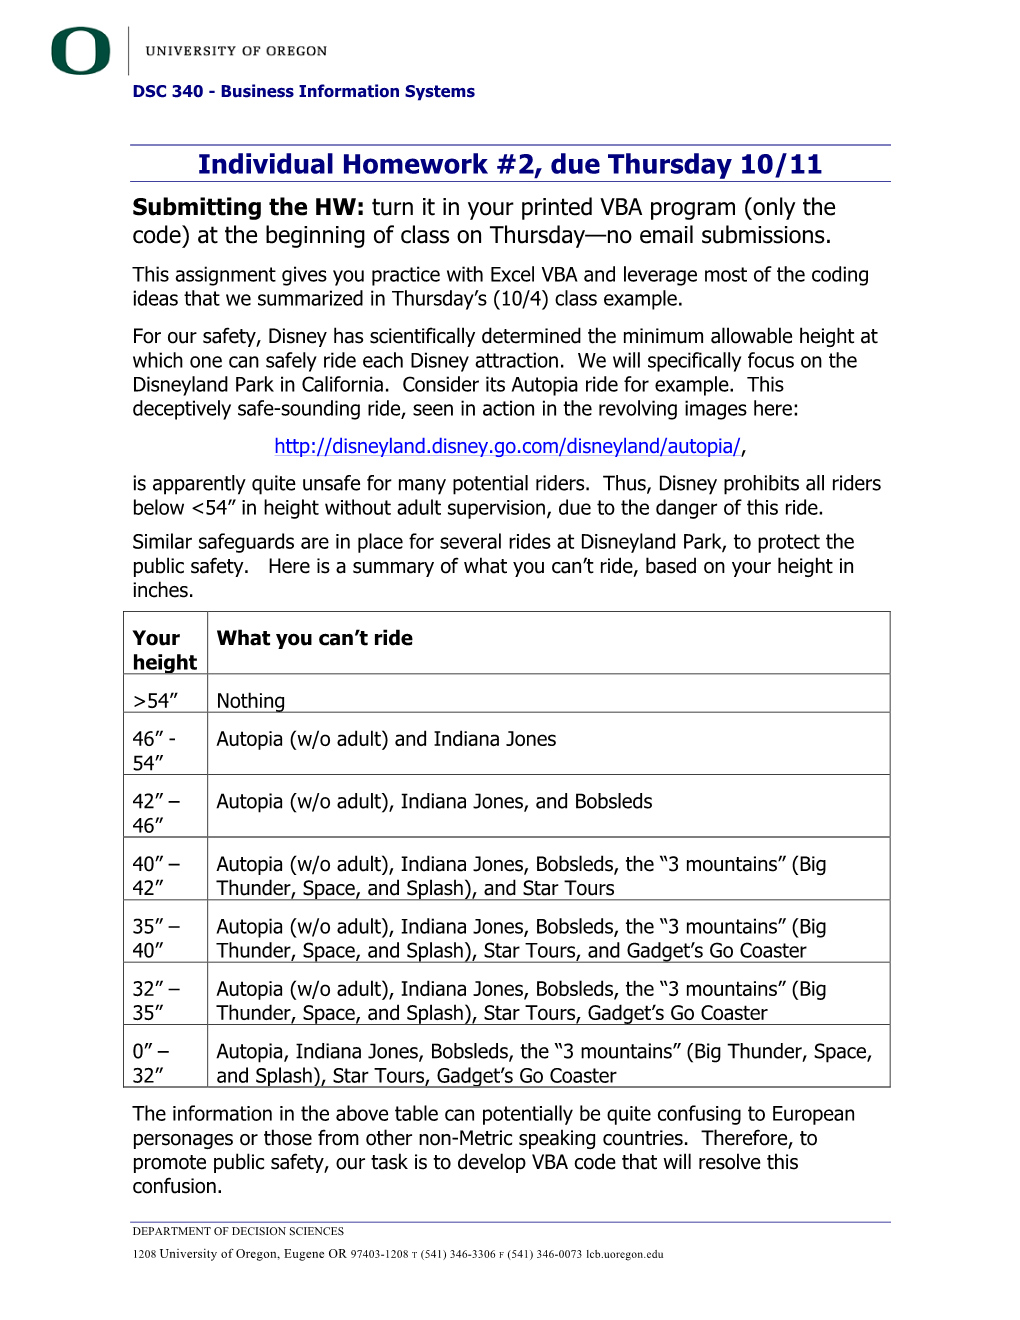 Individual Homework #2, Due Thursday 10/11